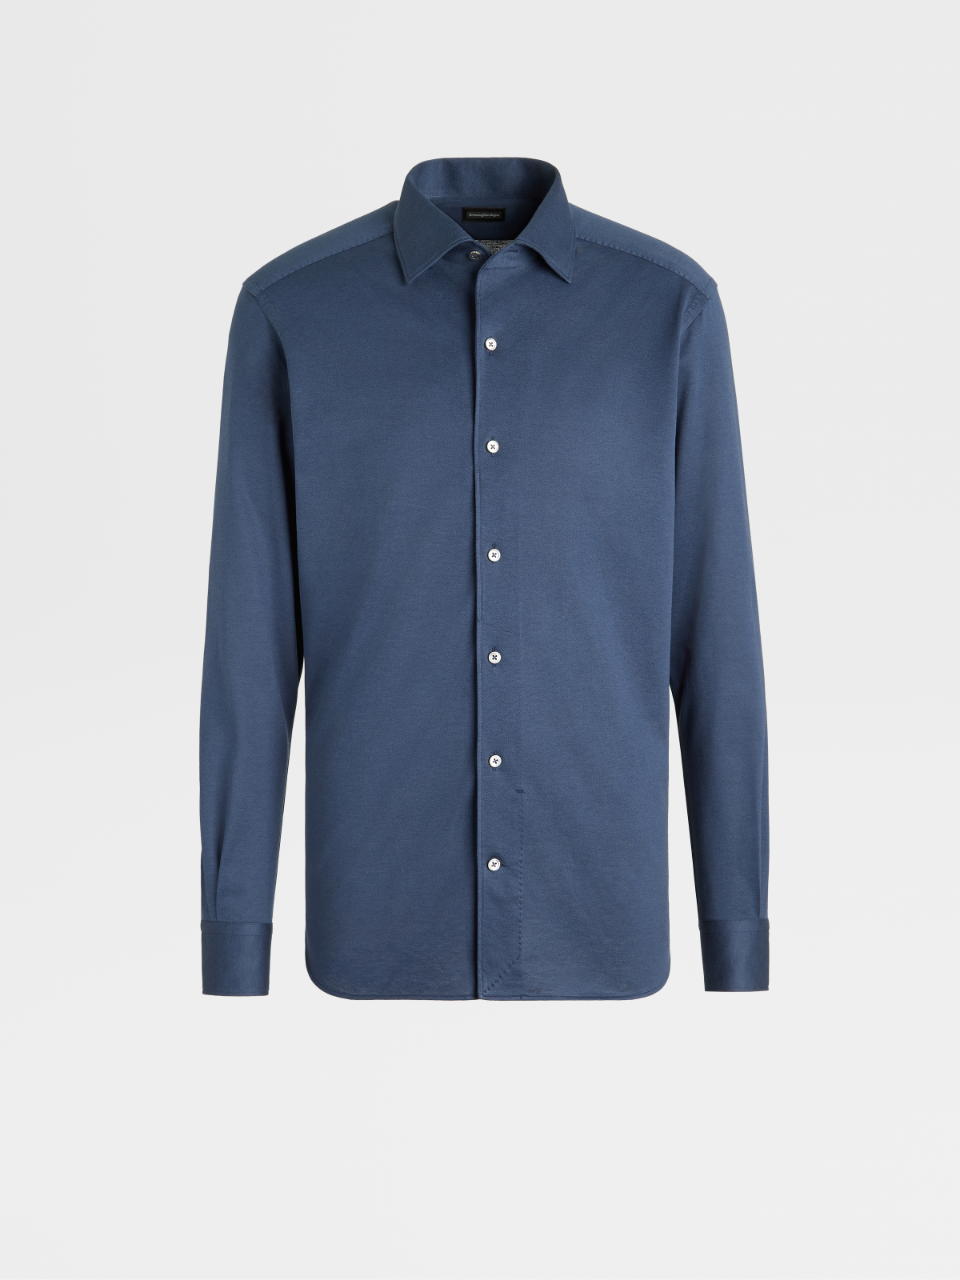 Ink Blue Cotton and Silk Shirt, Regular Fit